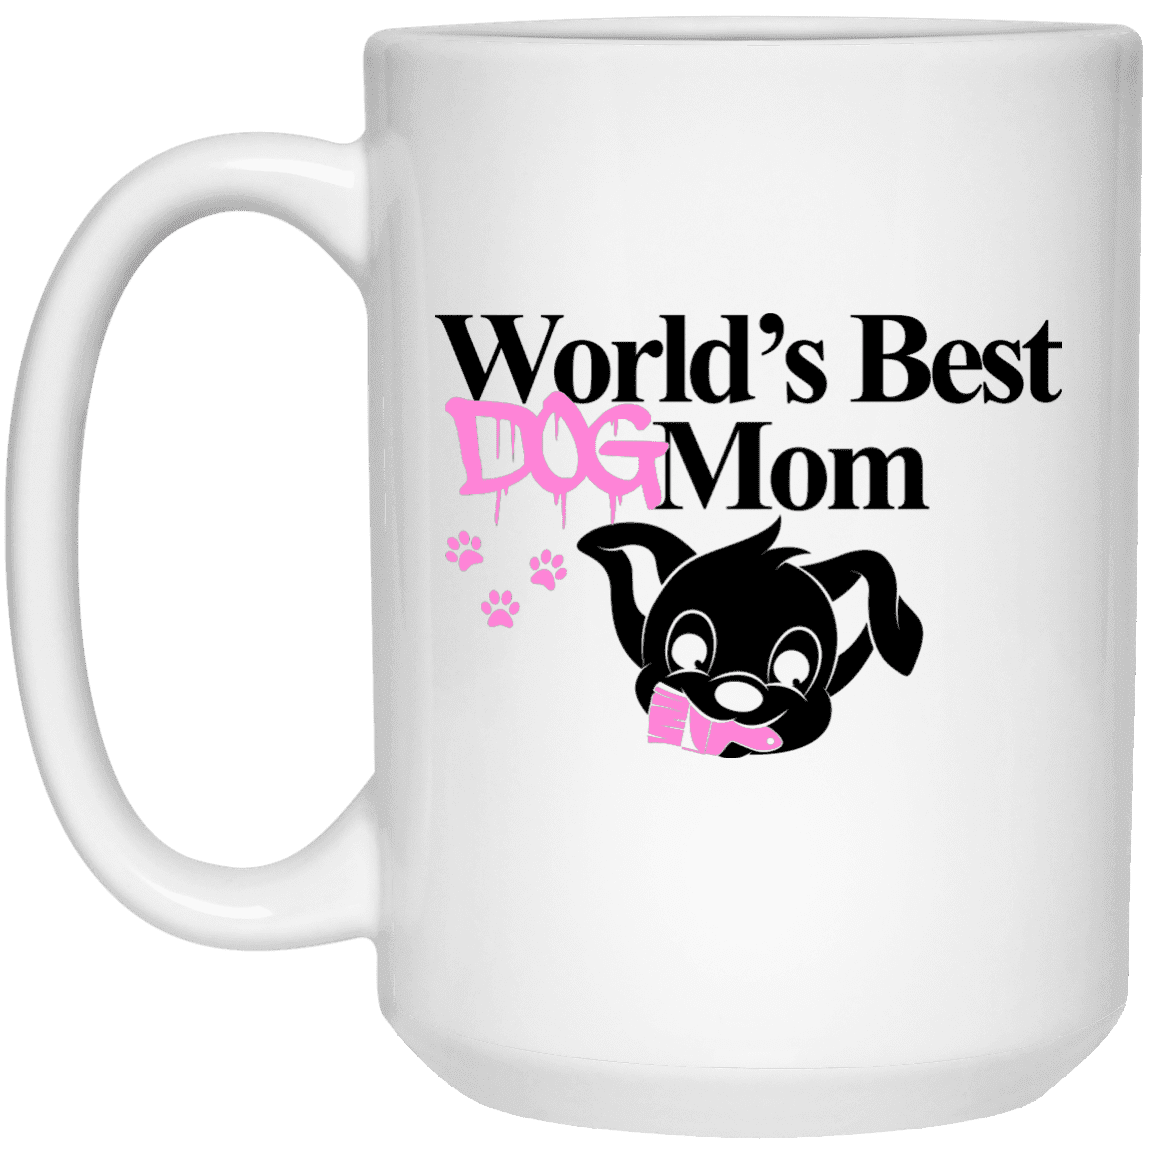 Worlds Best Dog Mom - Mugs.